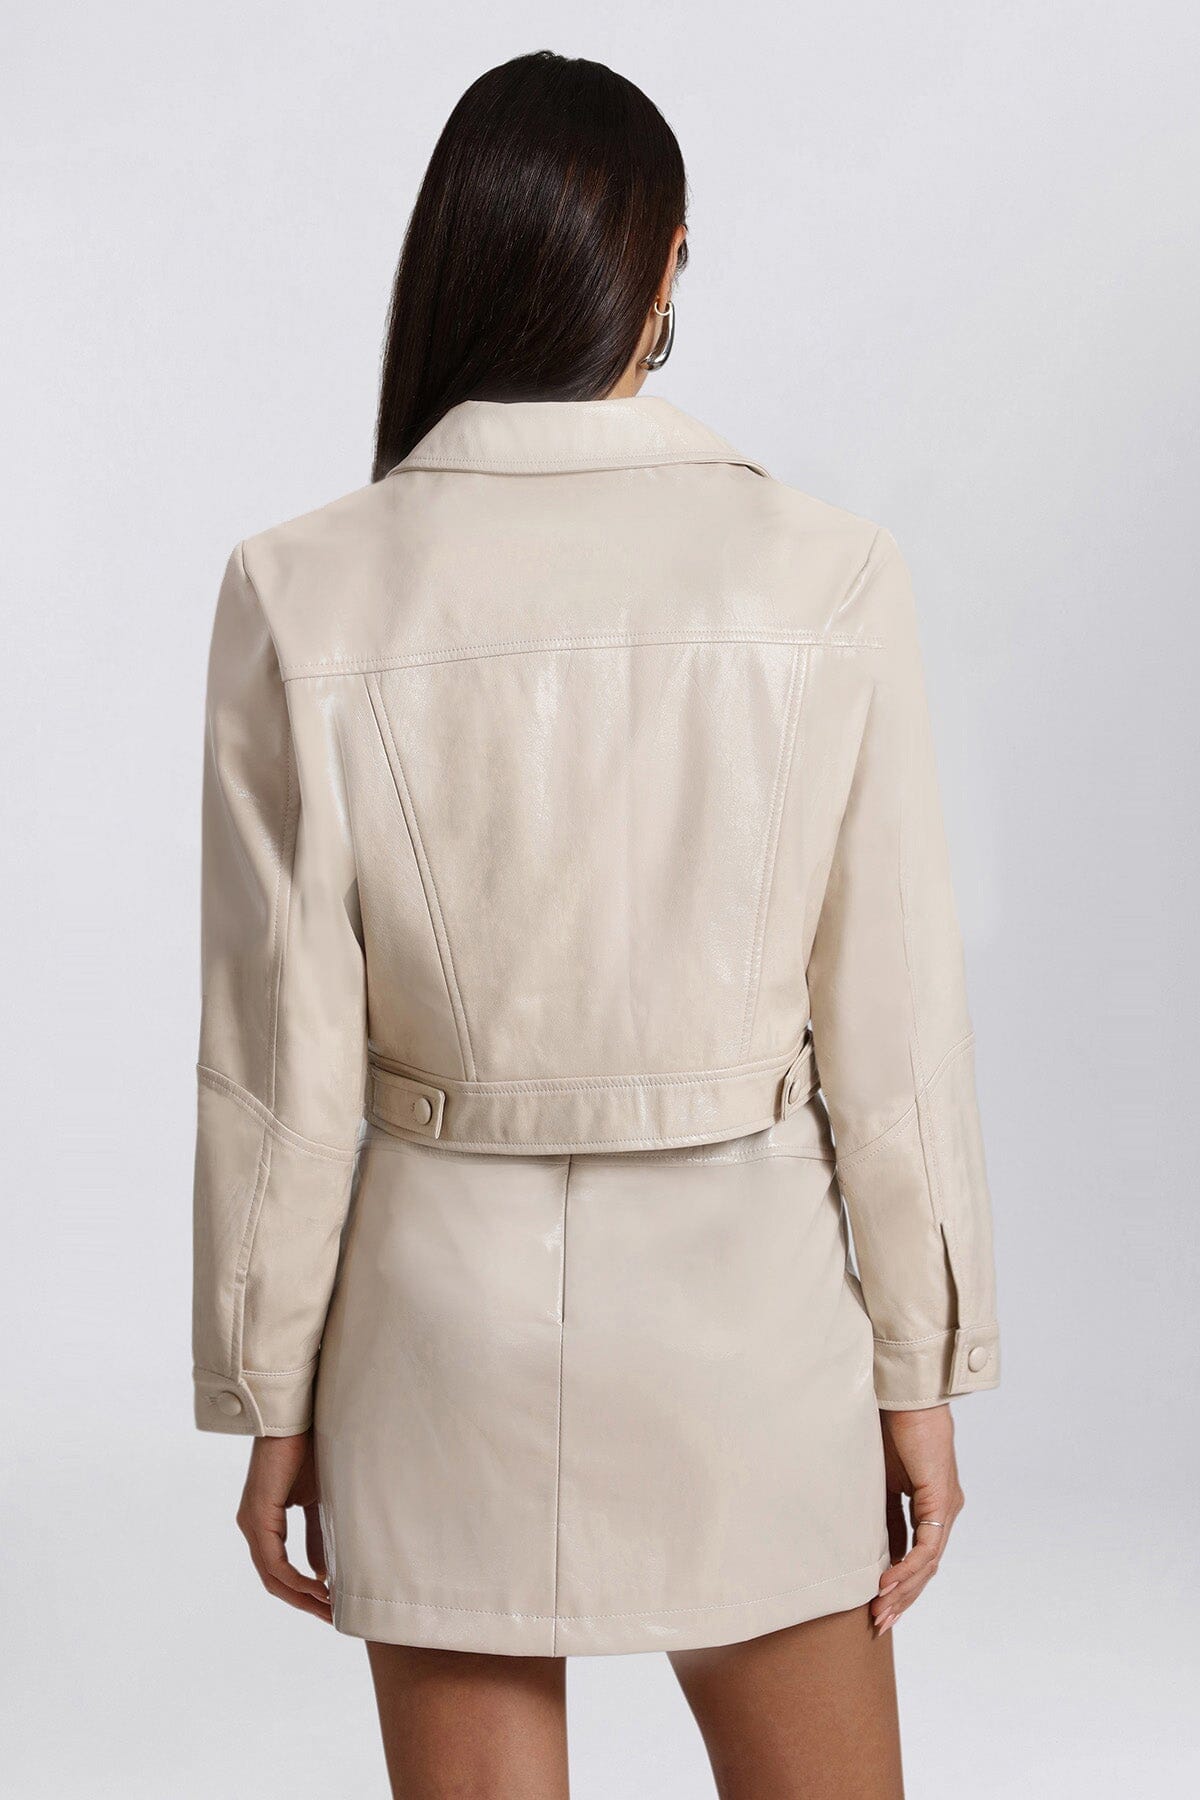 Off White glazed faux leather cropped trucker jacket coat - women's figure flattering work appropriate outerwear by Avec Les Filles